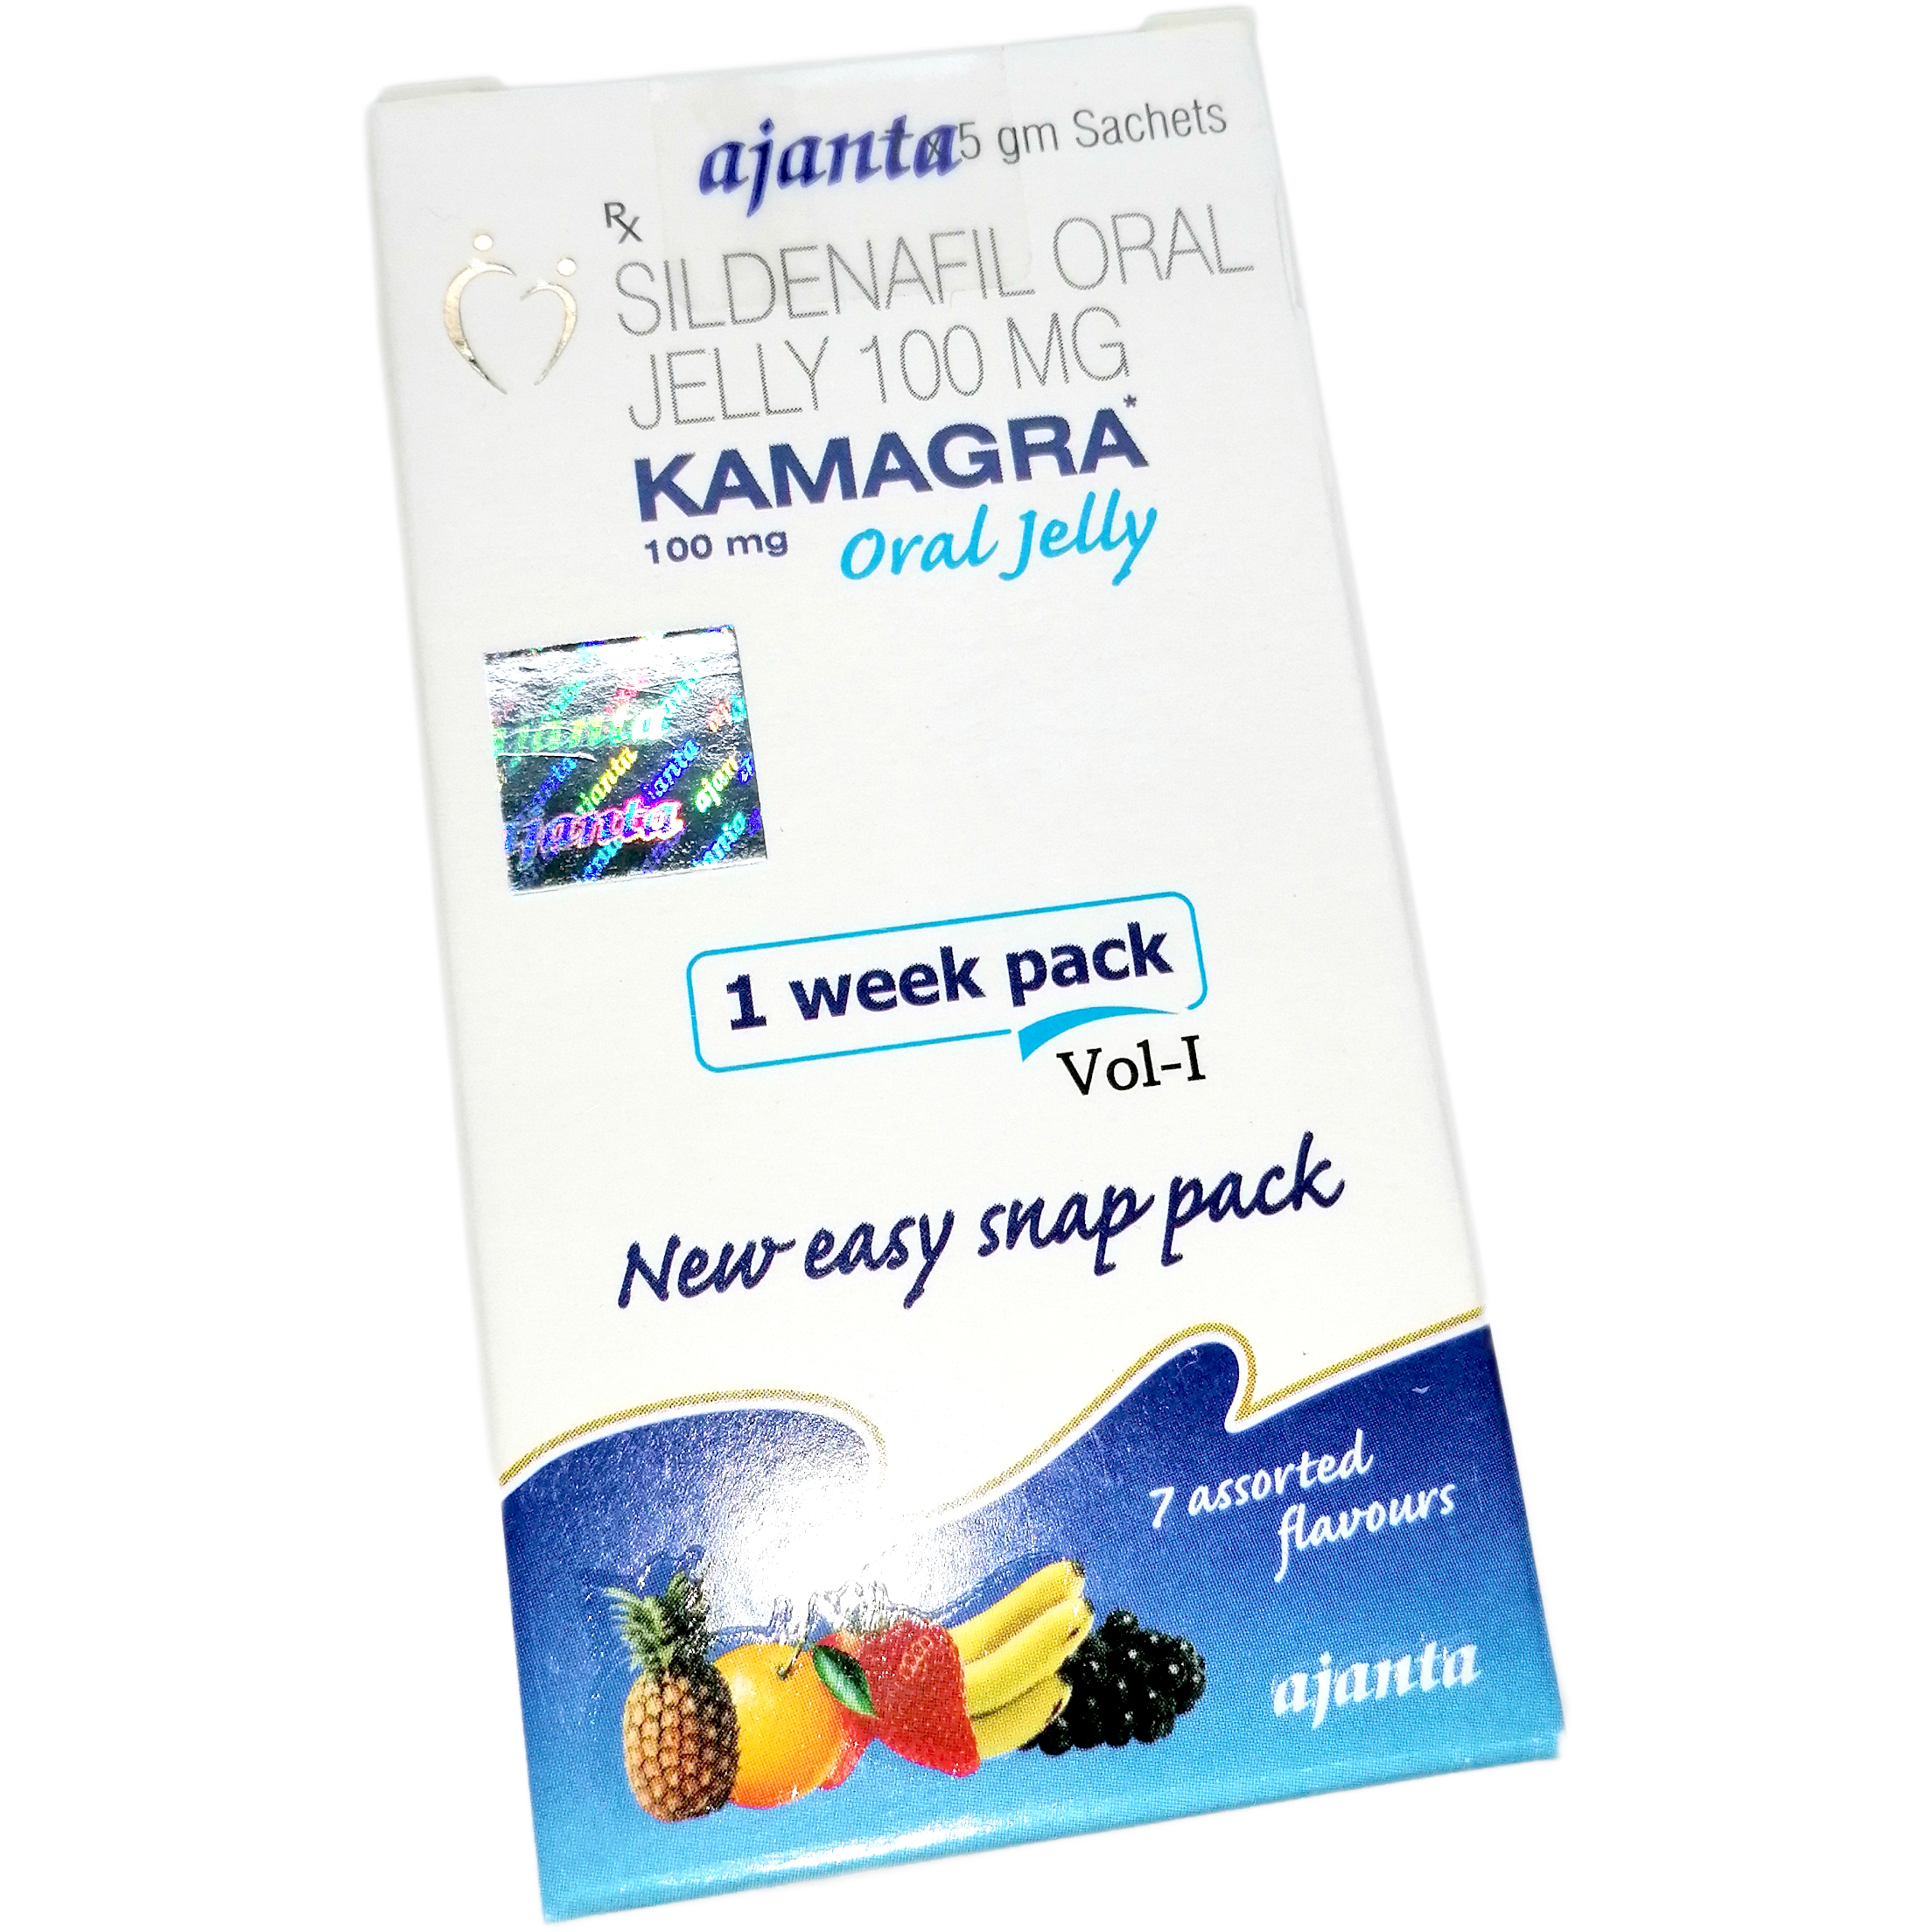 Kamagra Gel Oral Jelly 100 mg